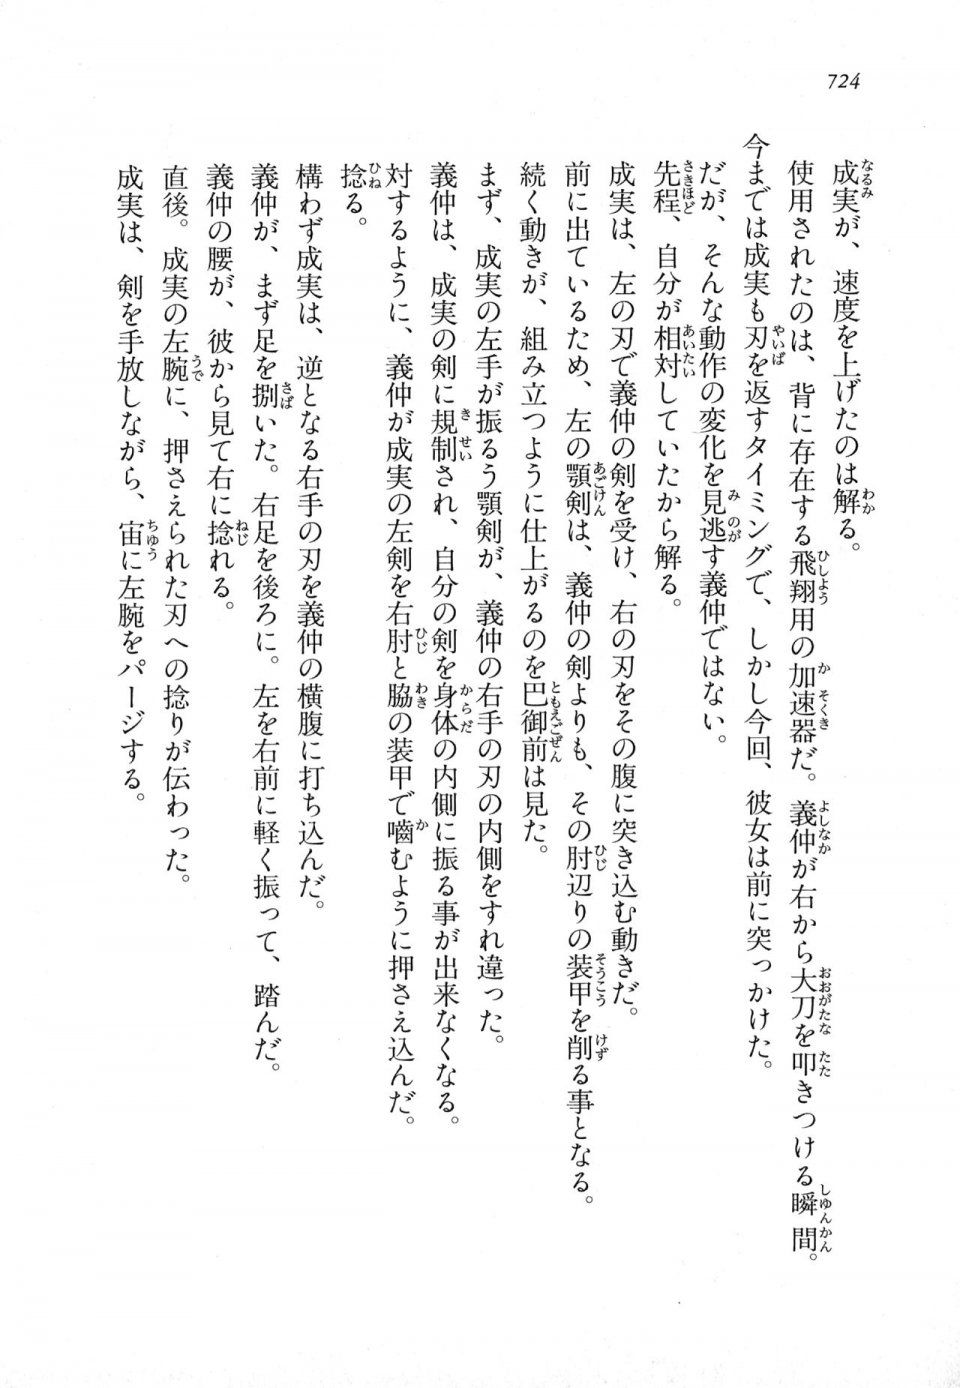 Kyoukai Senjou no Horizon LN Vol 18(7C) Part 2 - Photo #164